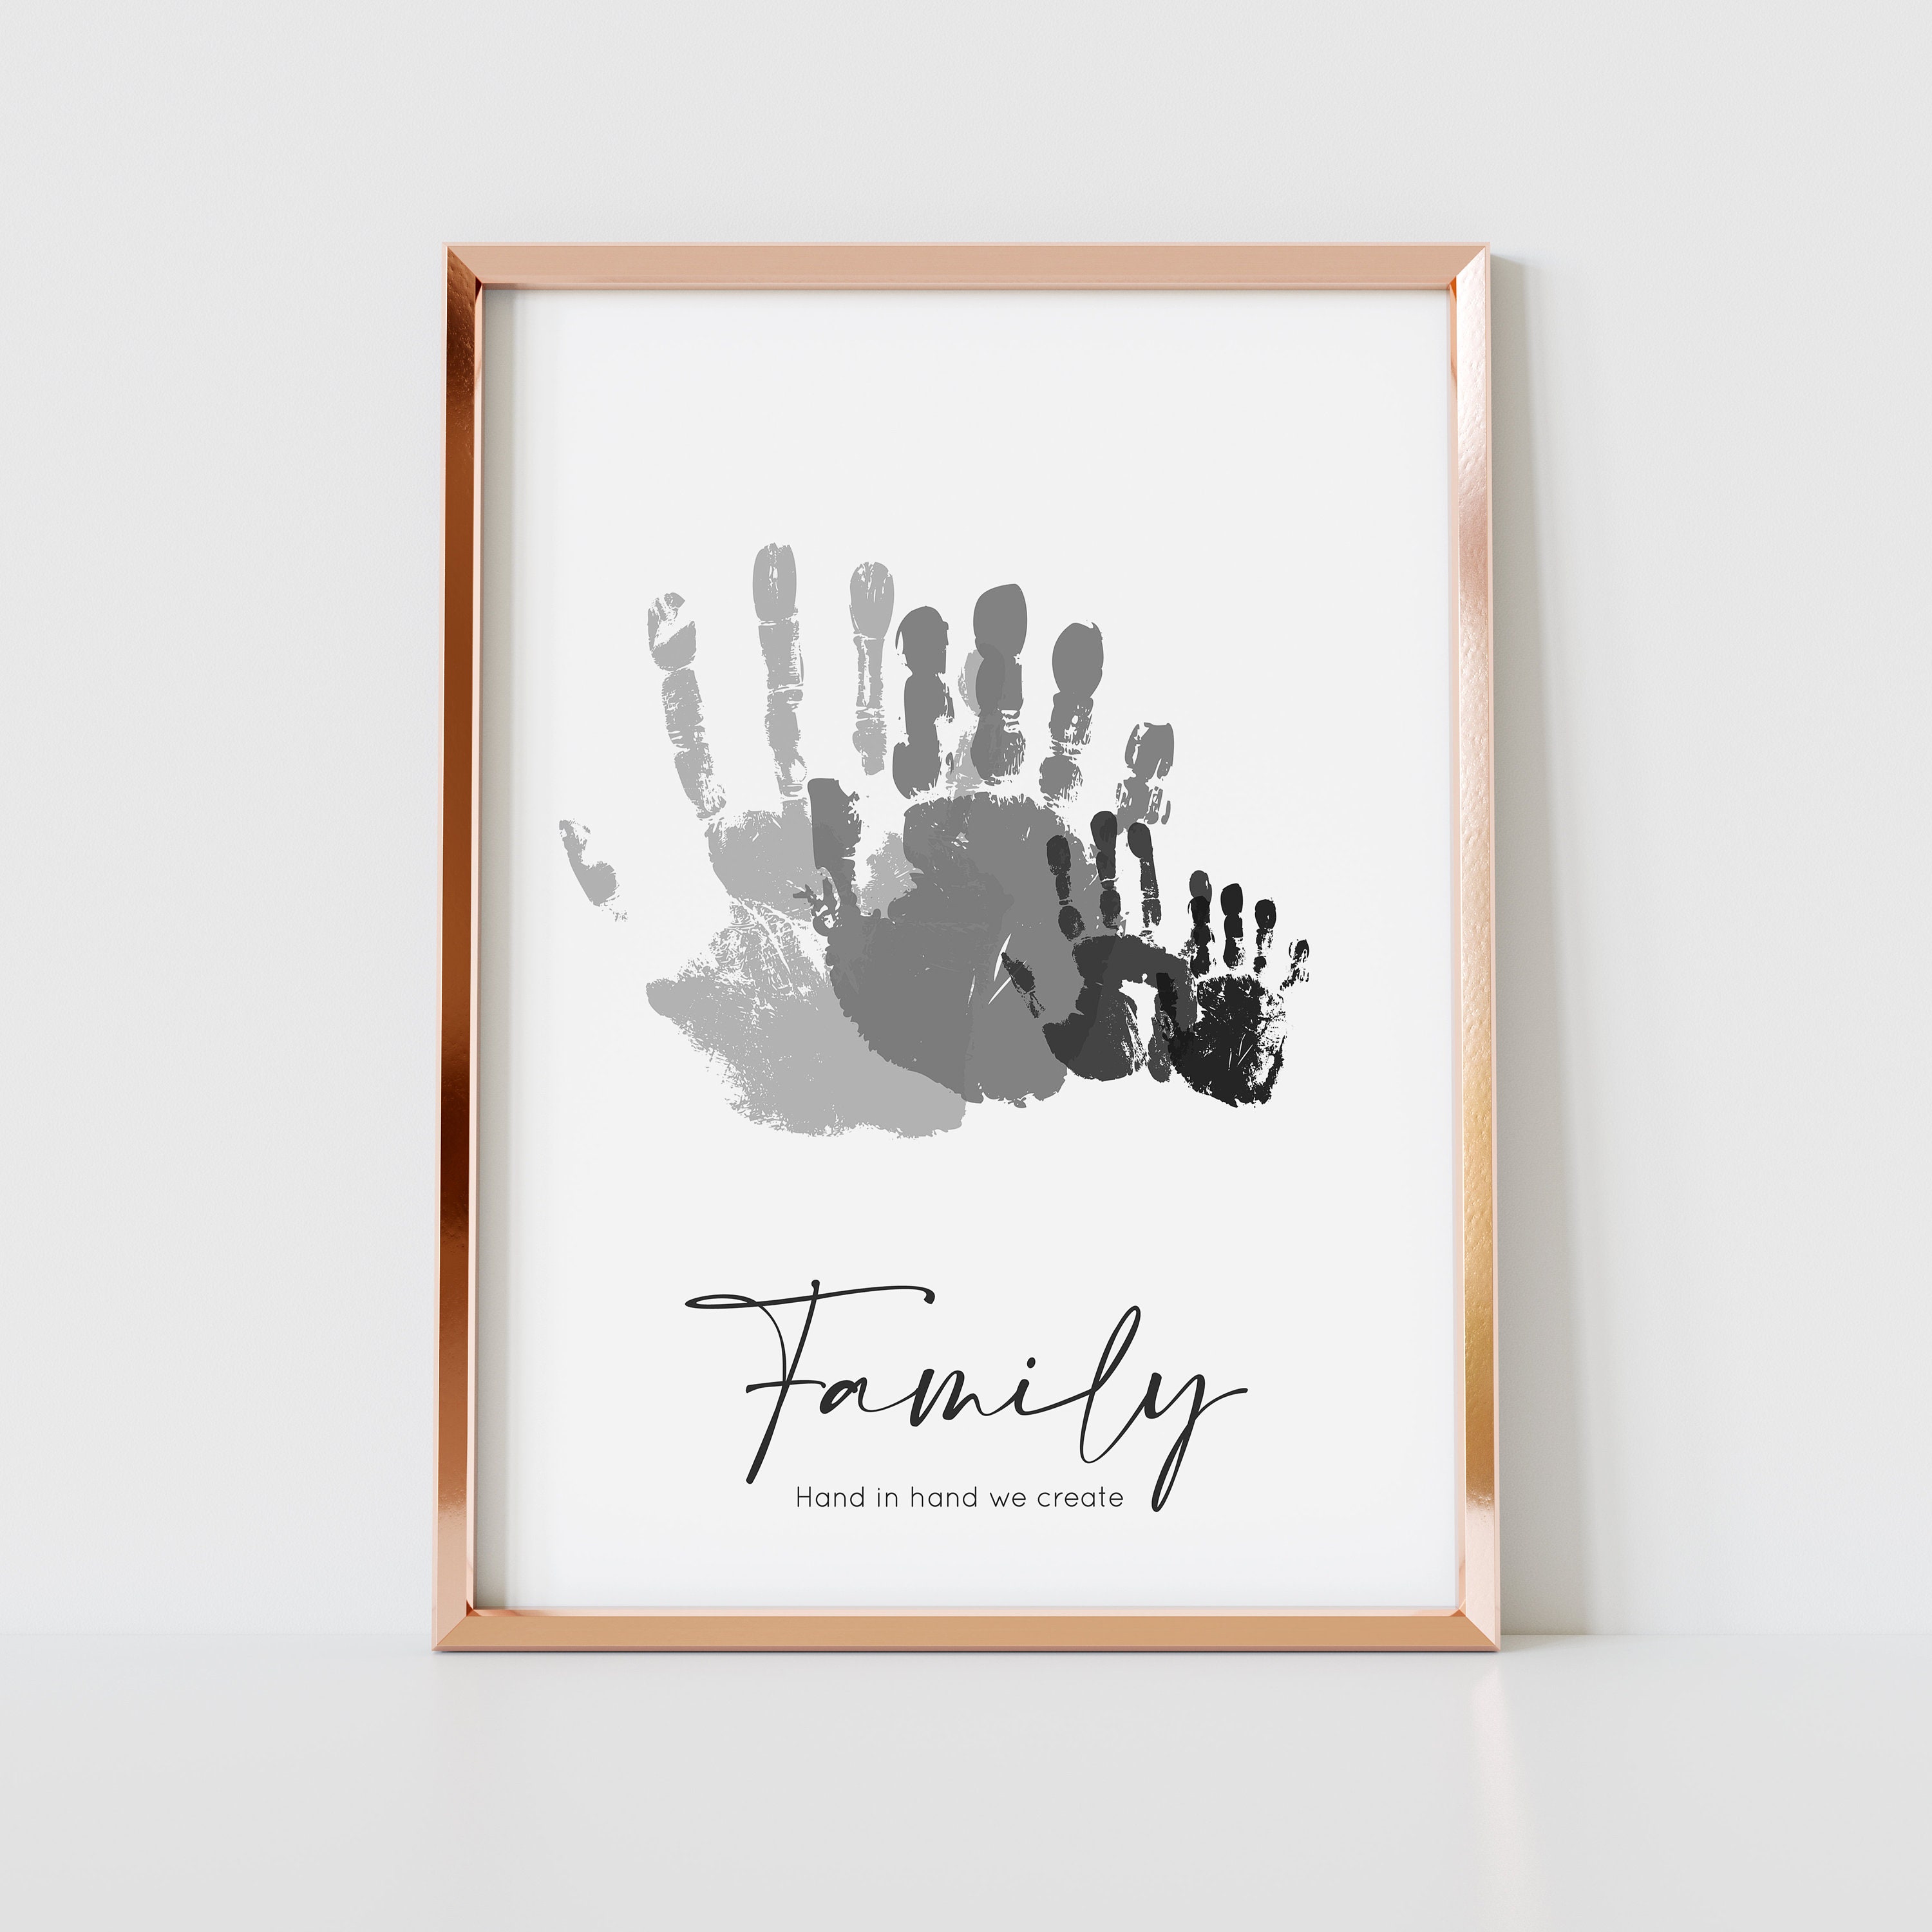 Genius Ideas for How to Make A Family Handprint Keepsake